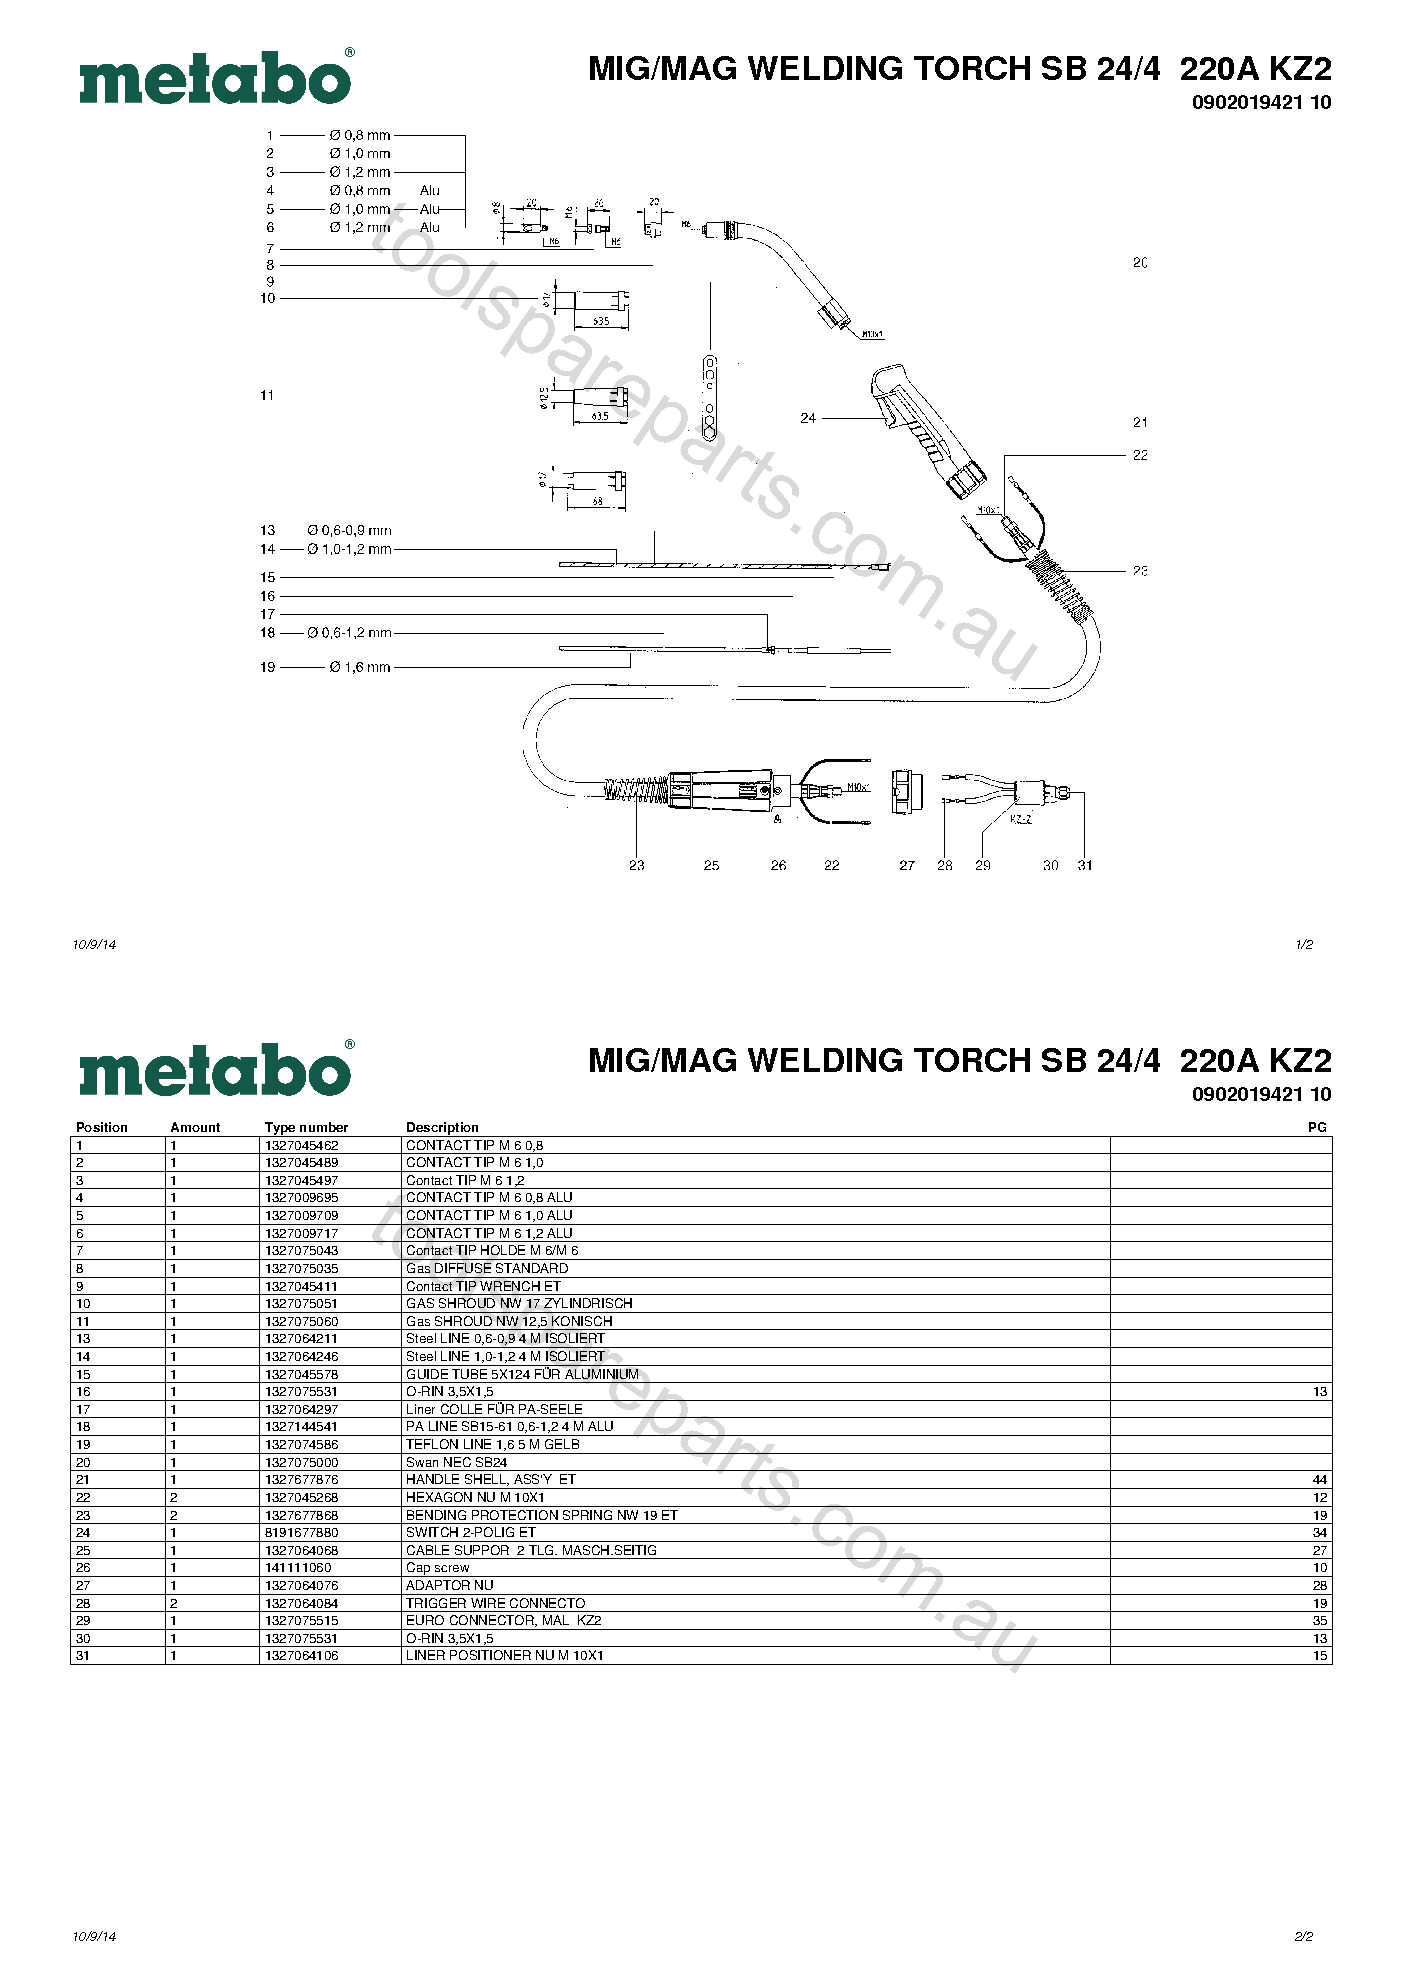 Metabo MIG/MAG WELDING TORCH SB 24/4 220A KZ2 0902019421 10  Diagram 1